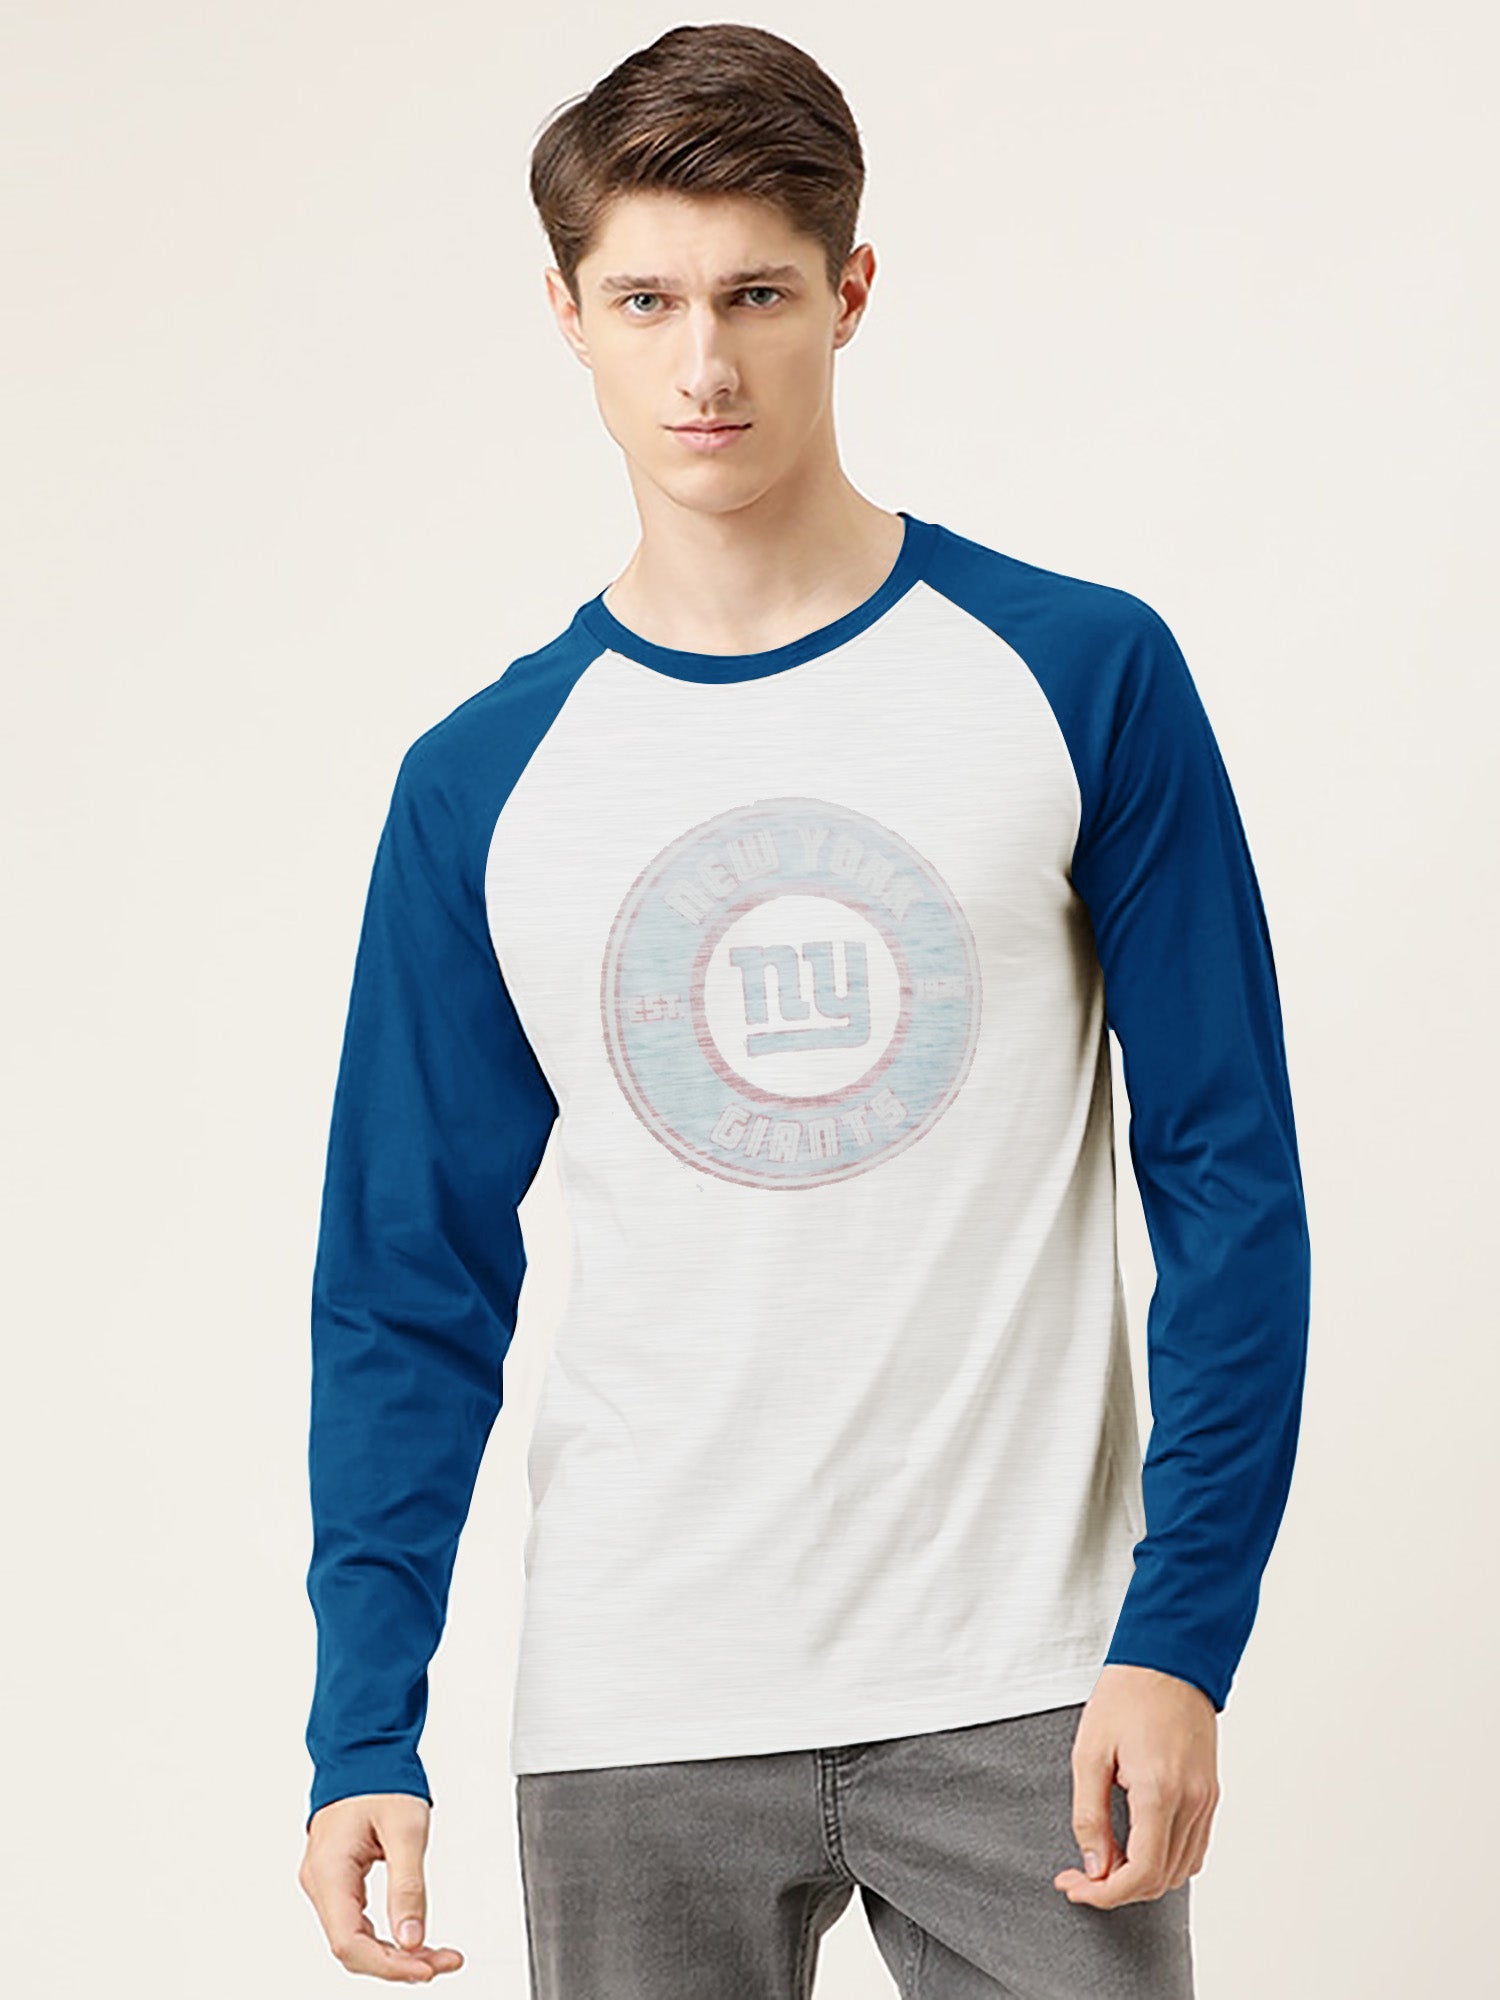 47 Raglan Sleeve Crew Neck Tee Shirt For Men-Off White Melange & Blue with Print-SP2081